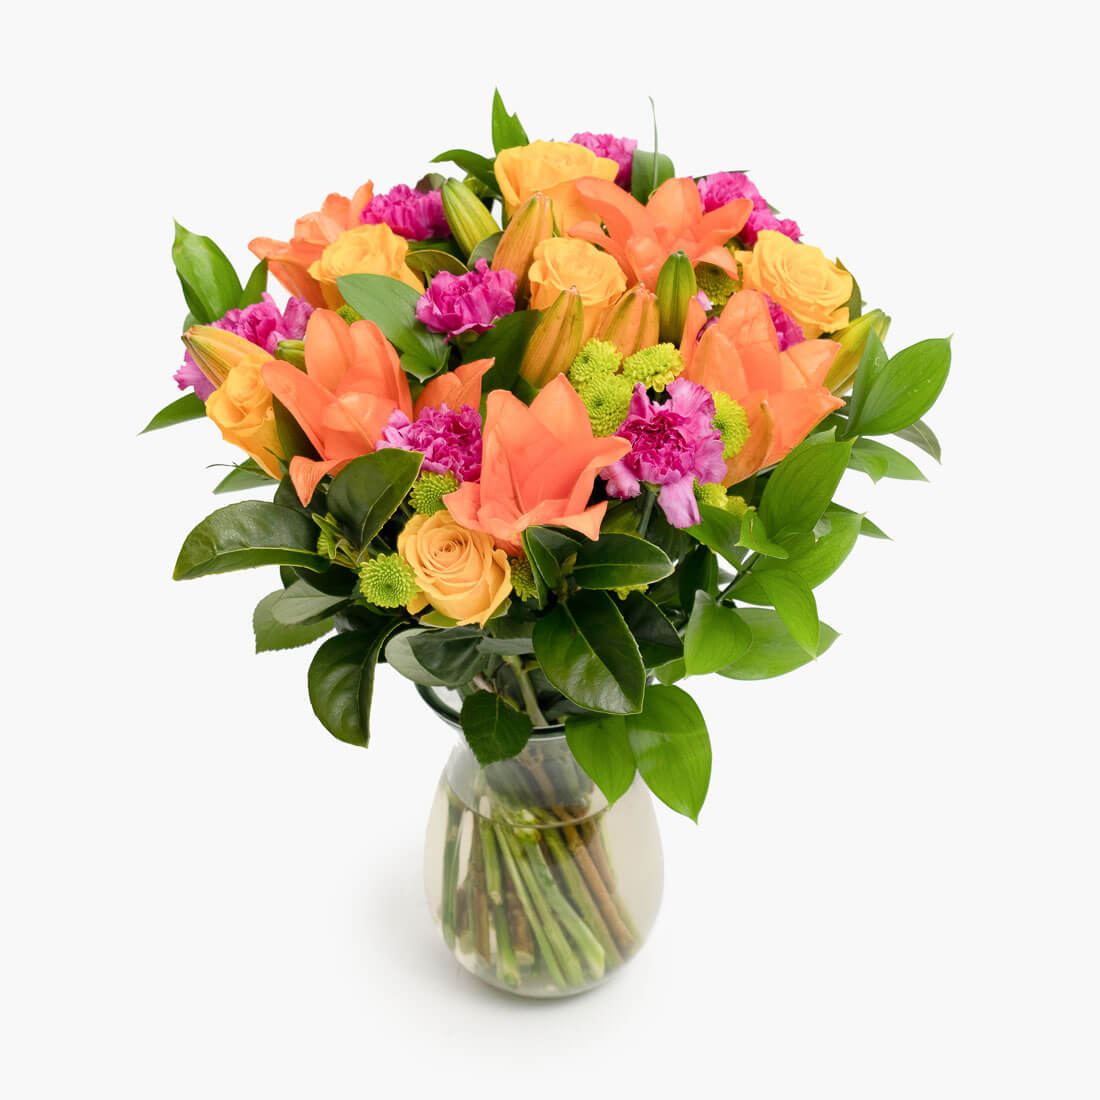 Bright coloured Geelong florist arrangement in a glass flower vase